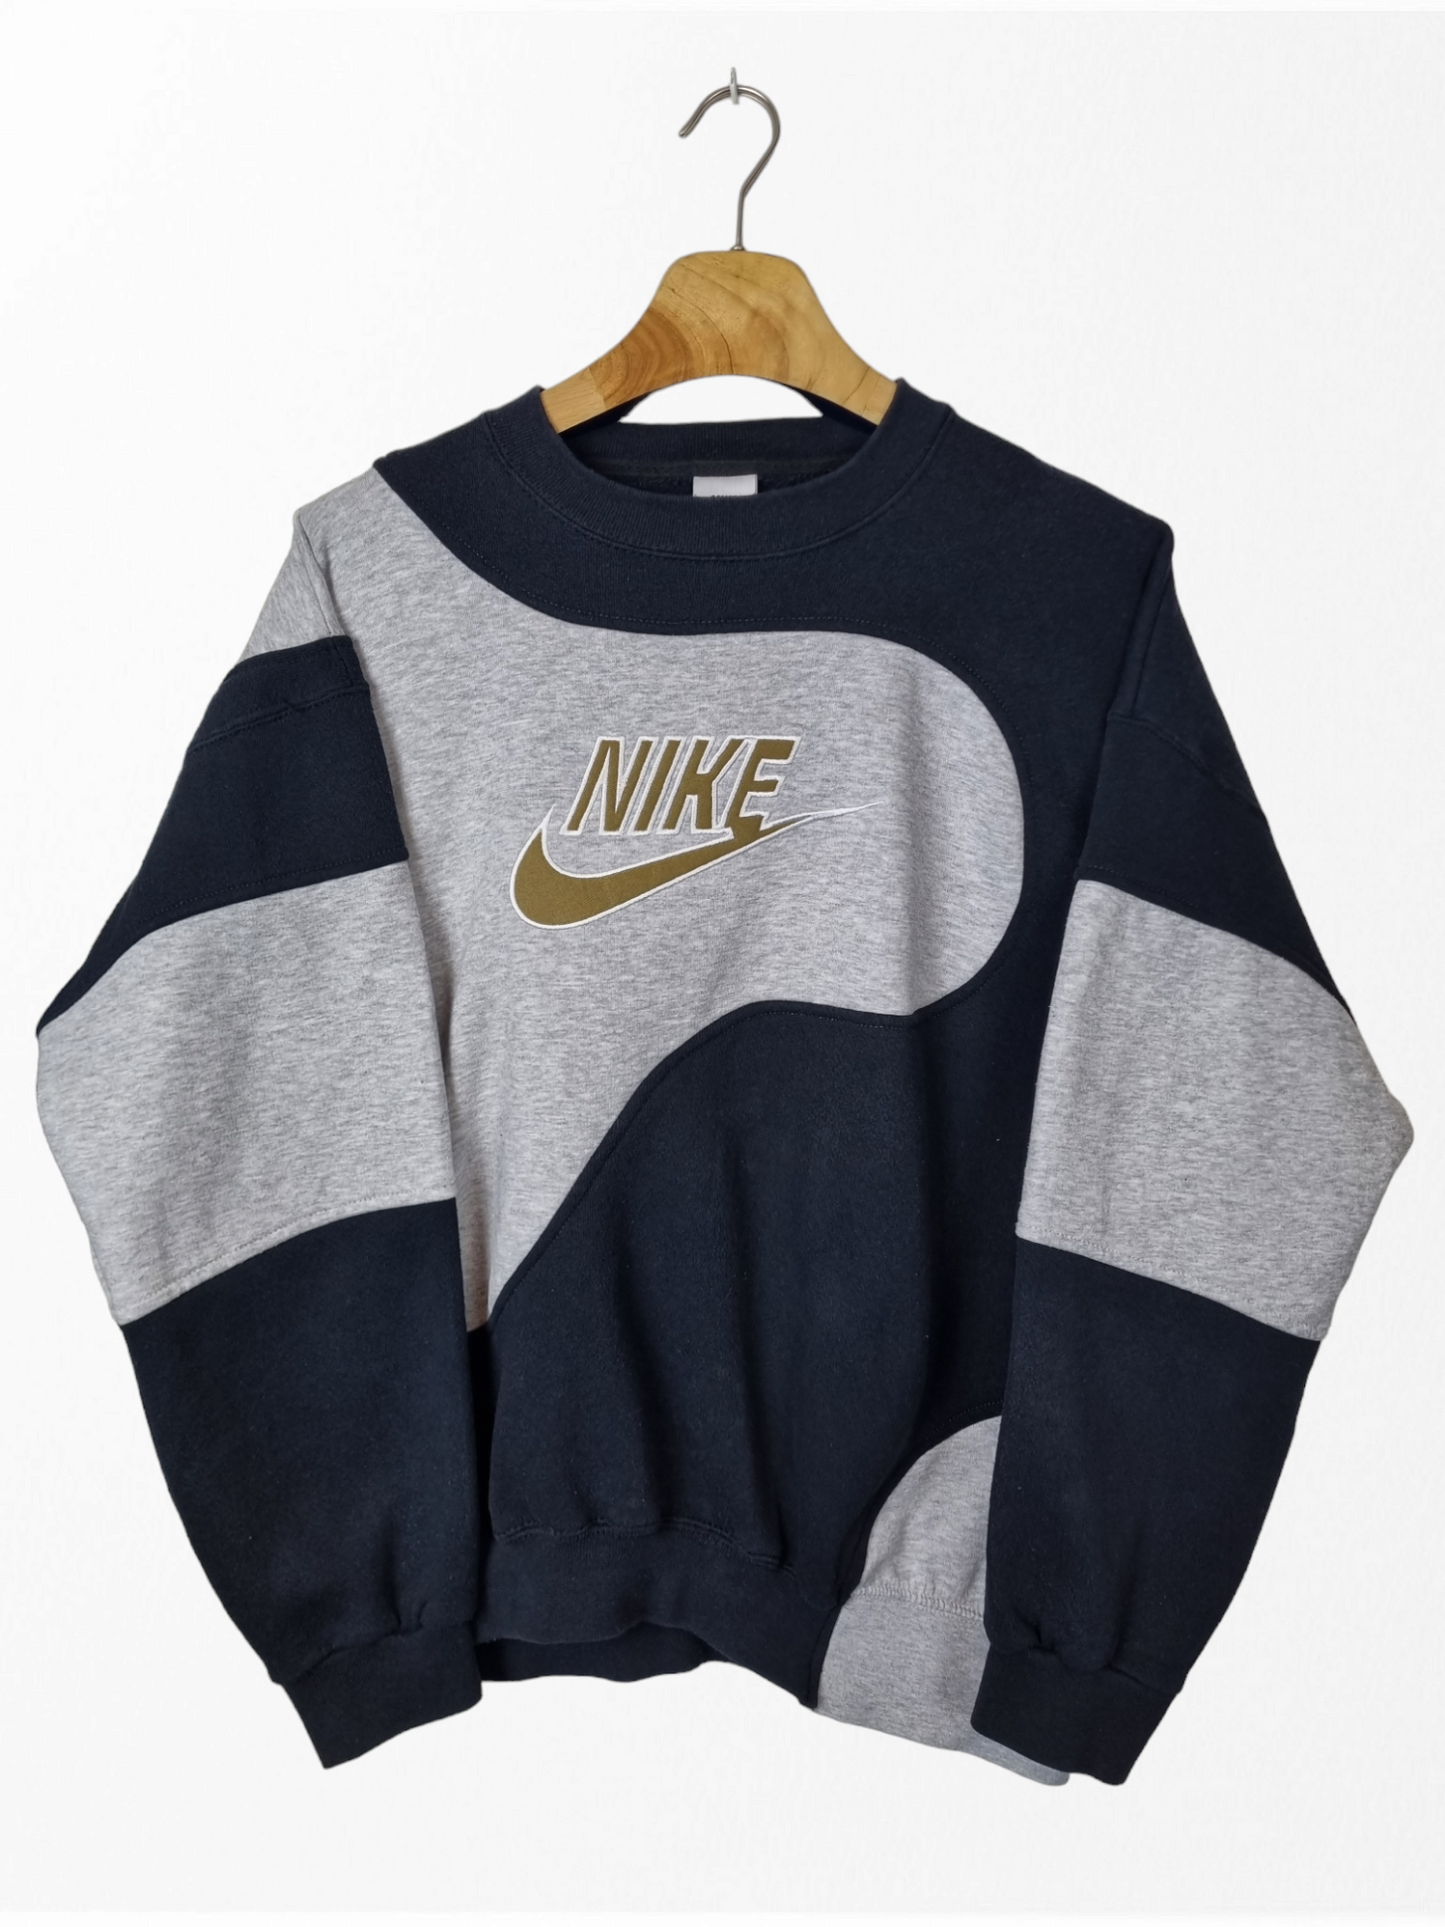 Nike front logo sweater maat M/L